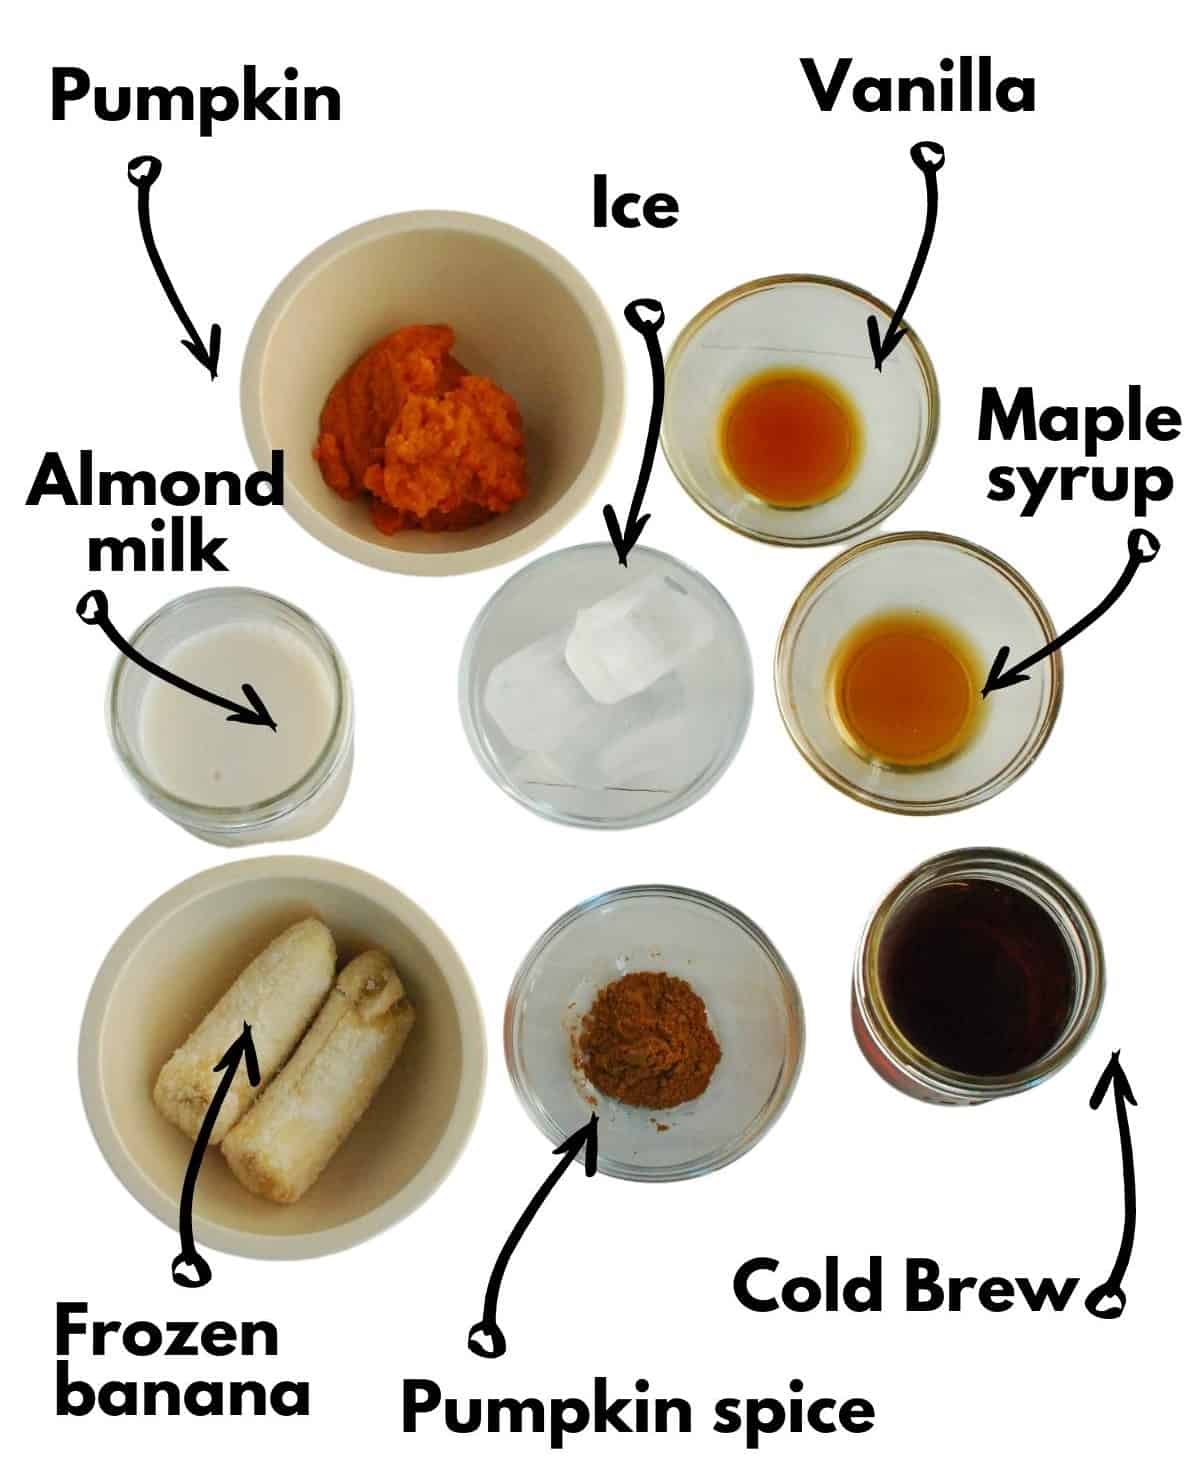 Pumpkin, vanilla, maple syrup, ice, almond milk, banana, pumpkin spice, and coffee.